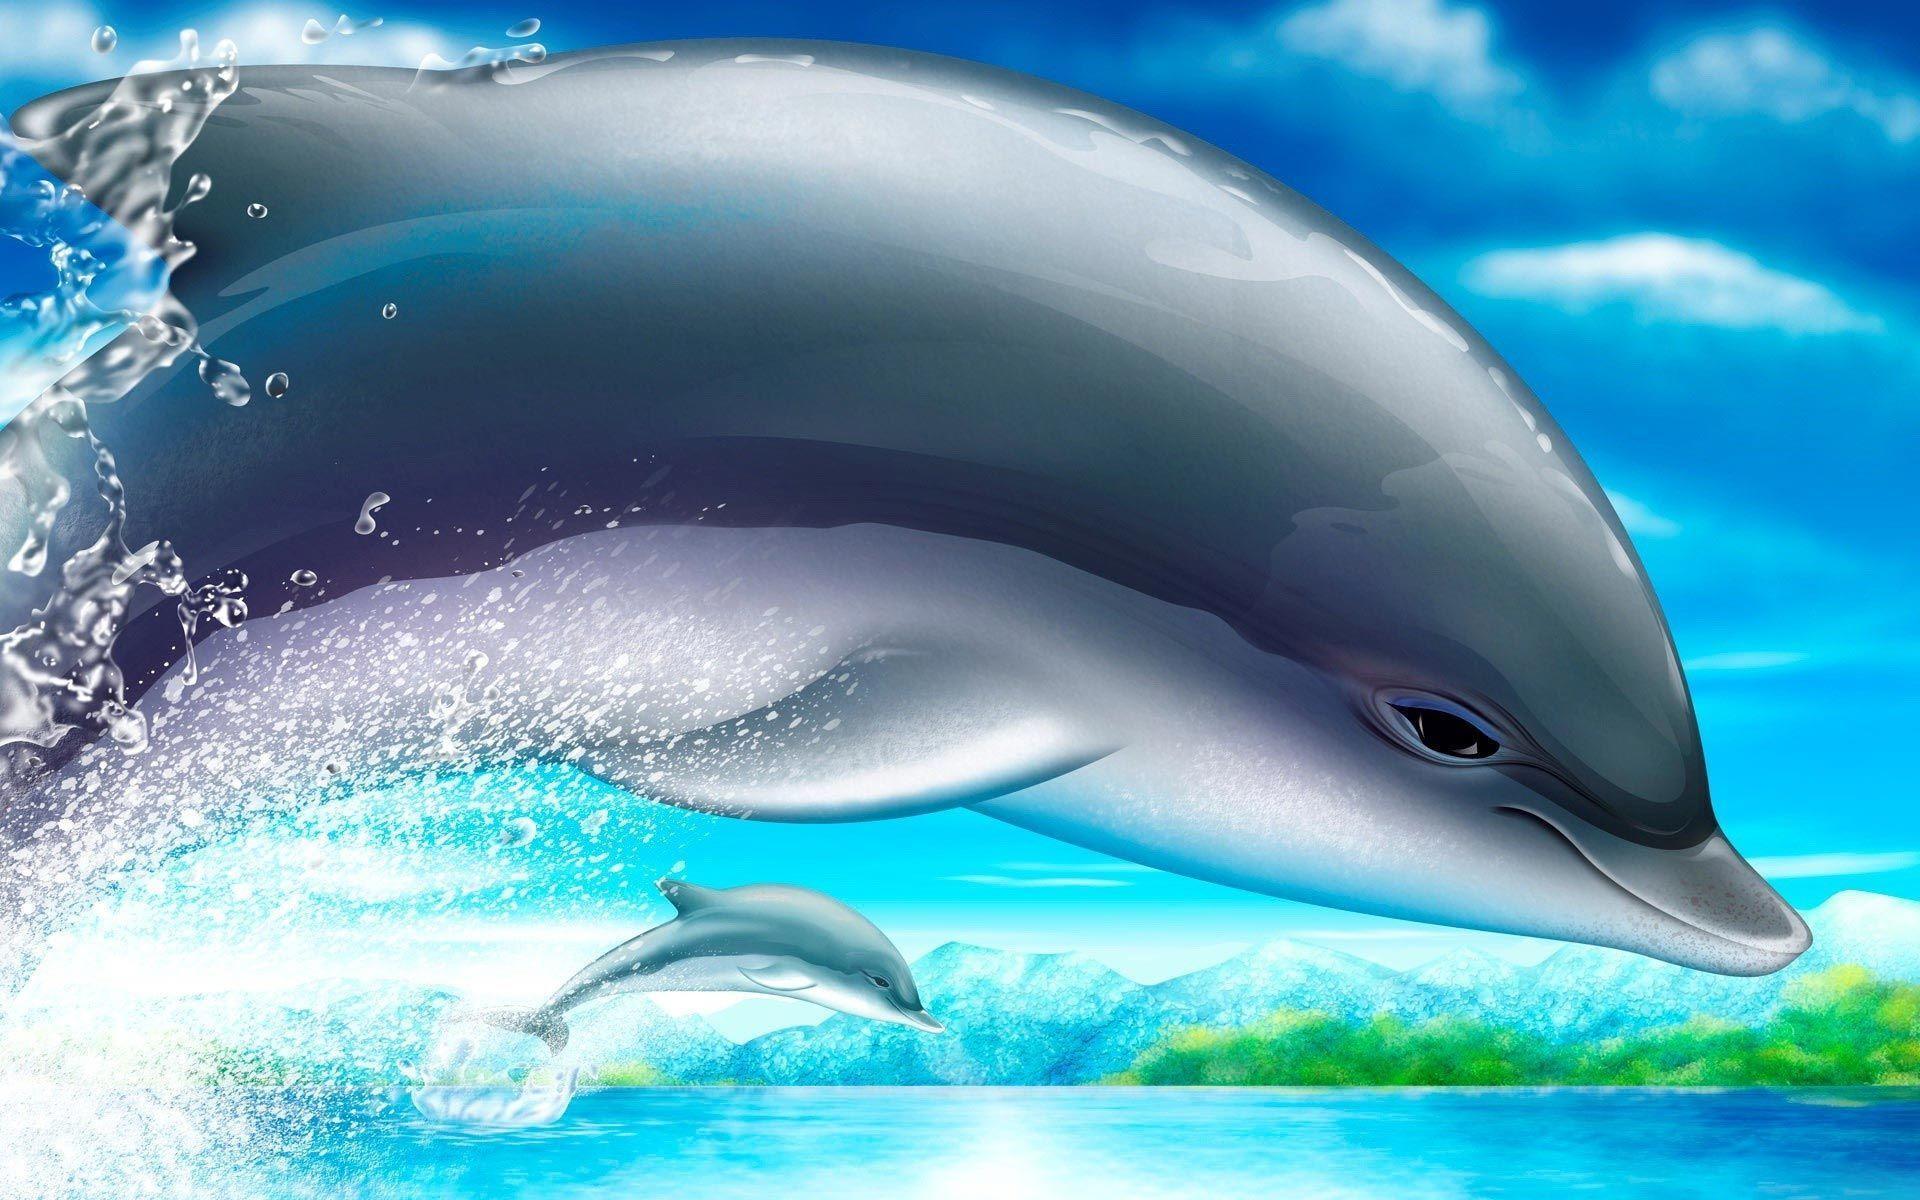 Desktop Wallpaper · Gallery · Windows 7 · Friendly Dolphins. Free